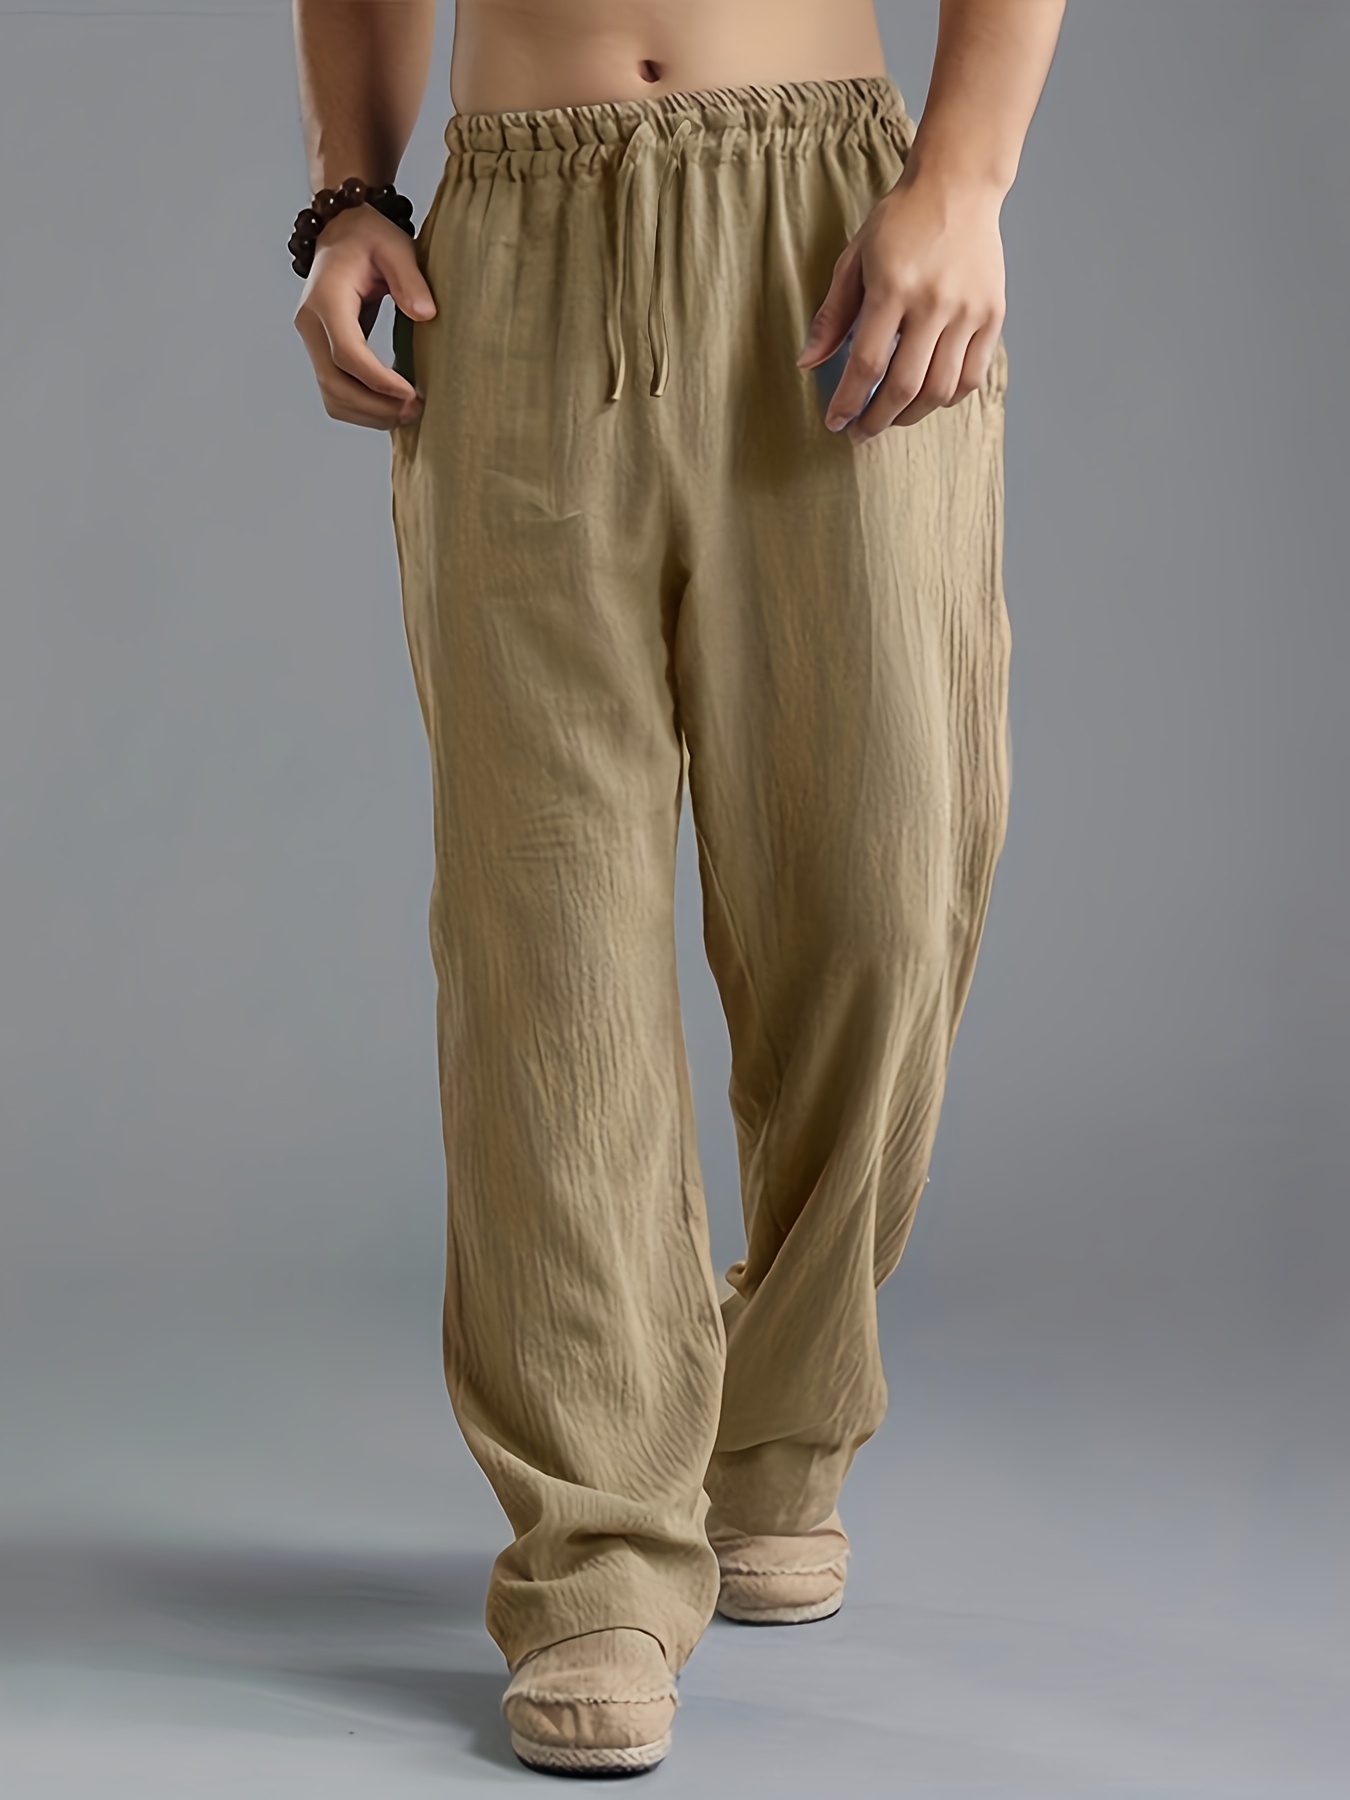 Drawstring Trousers for Men, Linen & Joggers